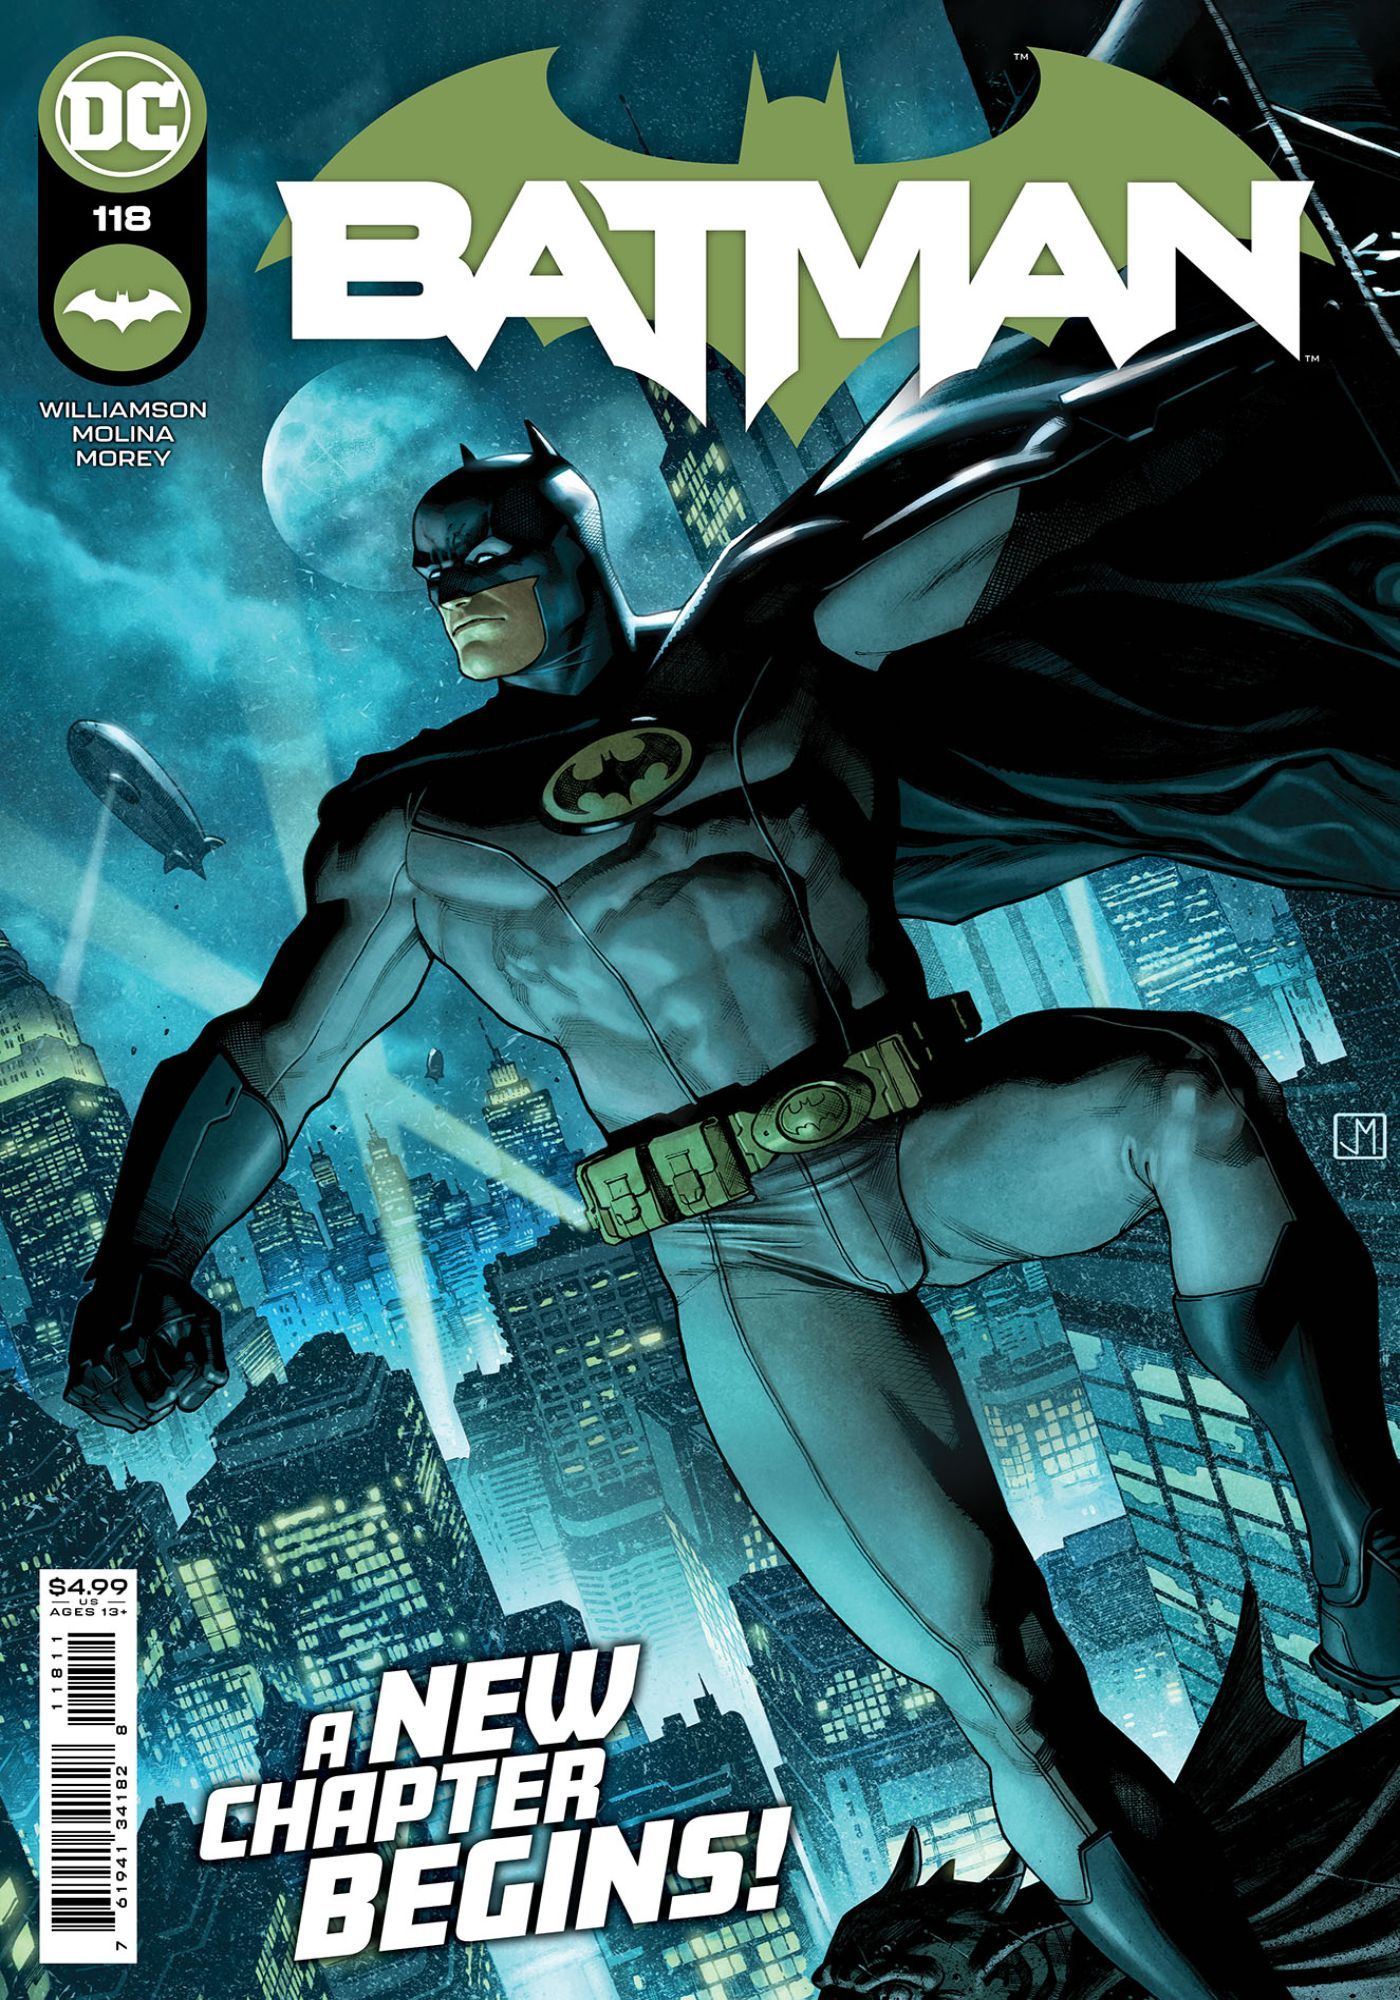 Batman Gets A New Batsuit Villain and Creative Team